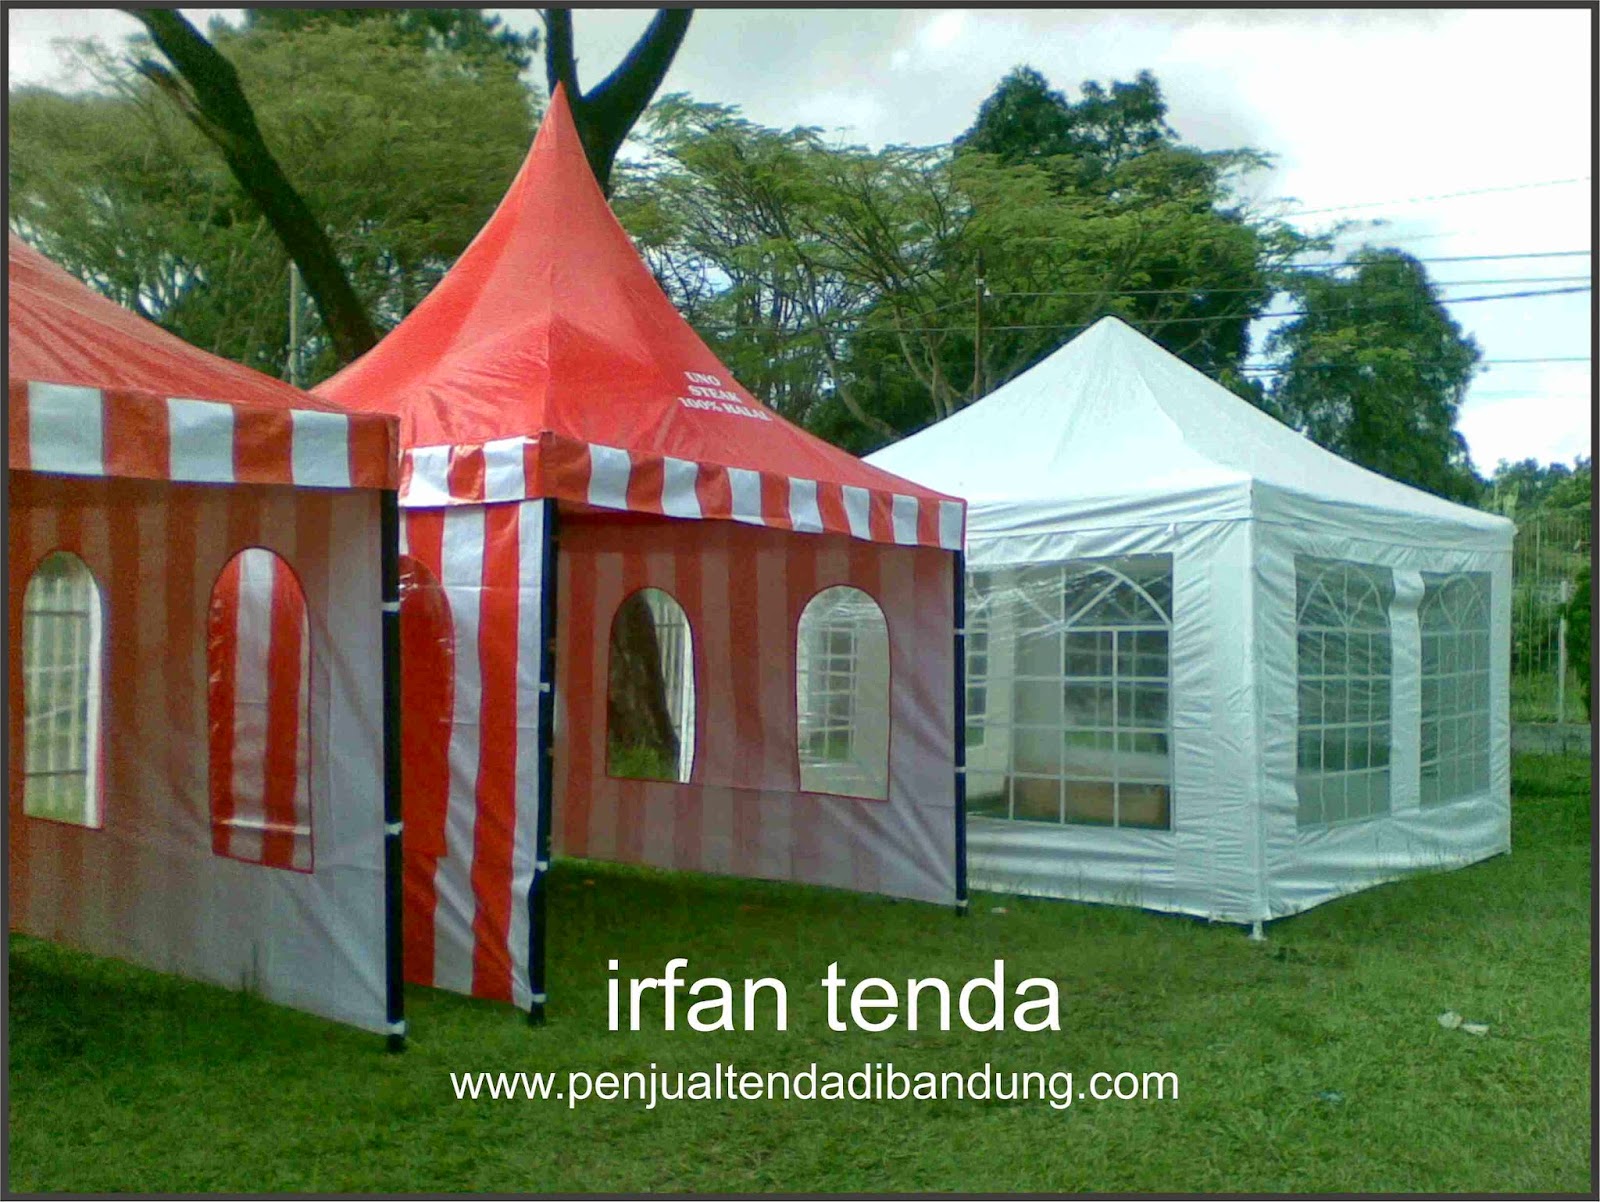 TENDA  EVENT | TENDA KERUCUT, Penjual tenda Event Kerucut di bandung, produksi tenda Event, menjual tenda Kerucut, harga tenda event kerucut,